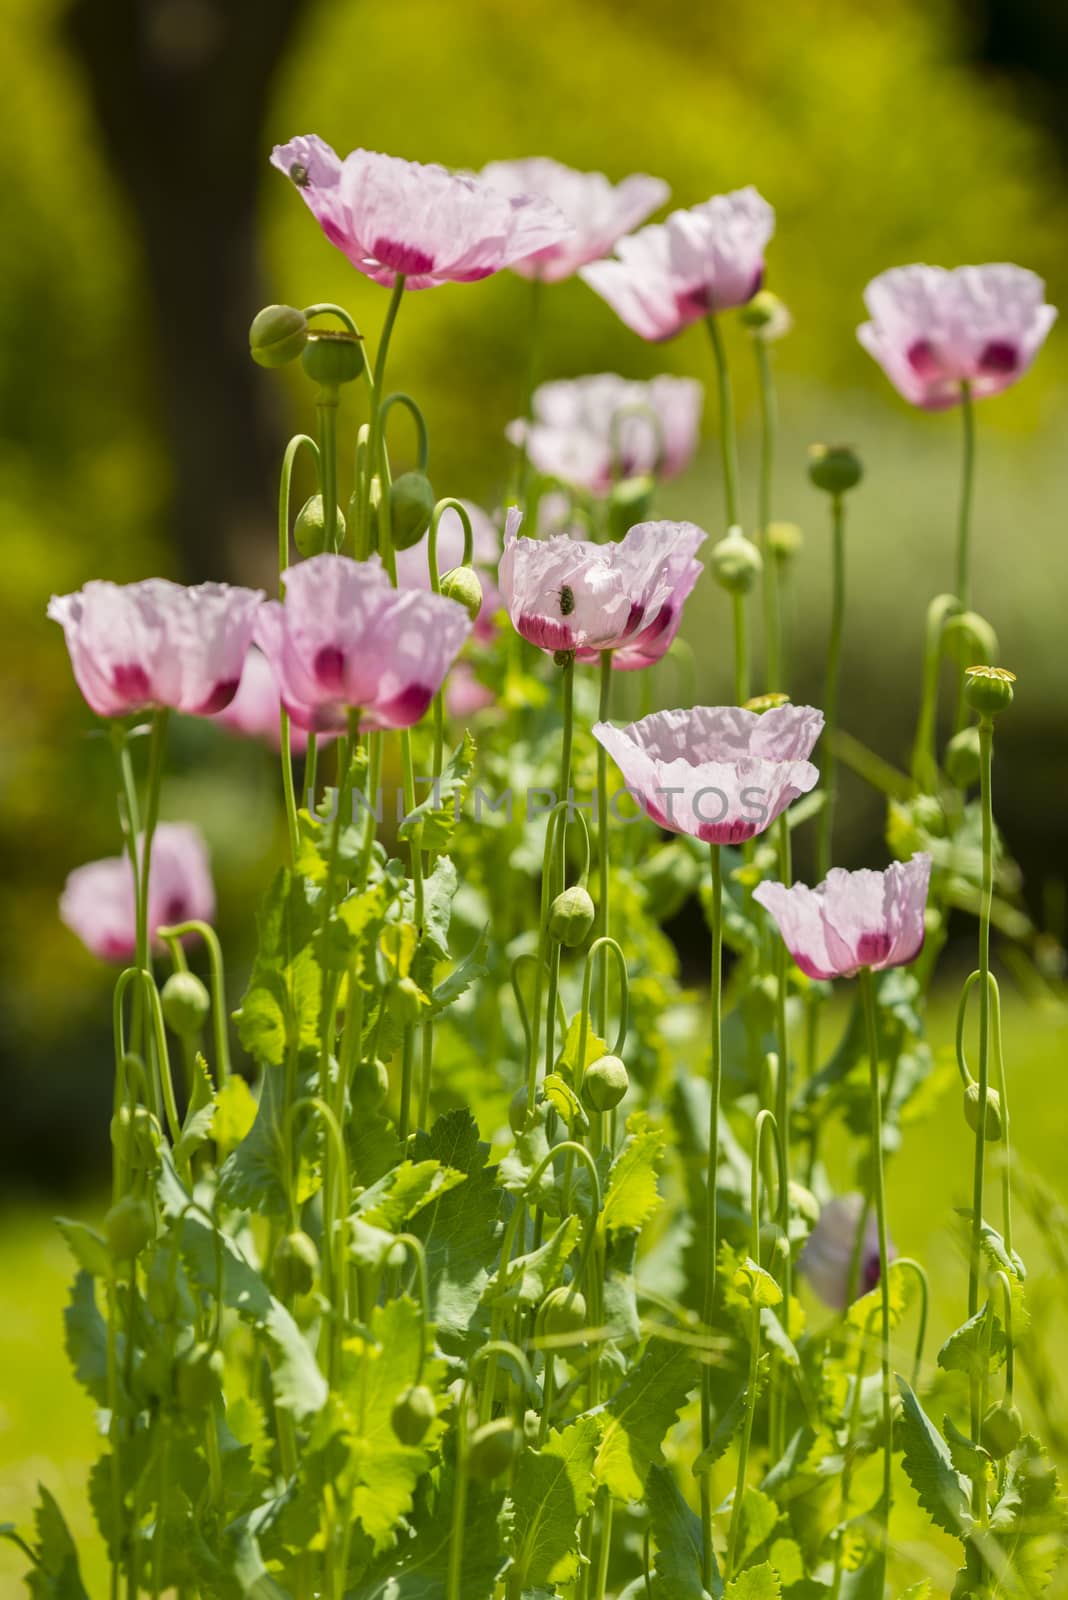 Opium poppy flowers, Papaver somniferum. by AlessandroZocc